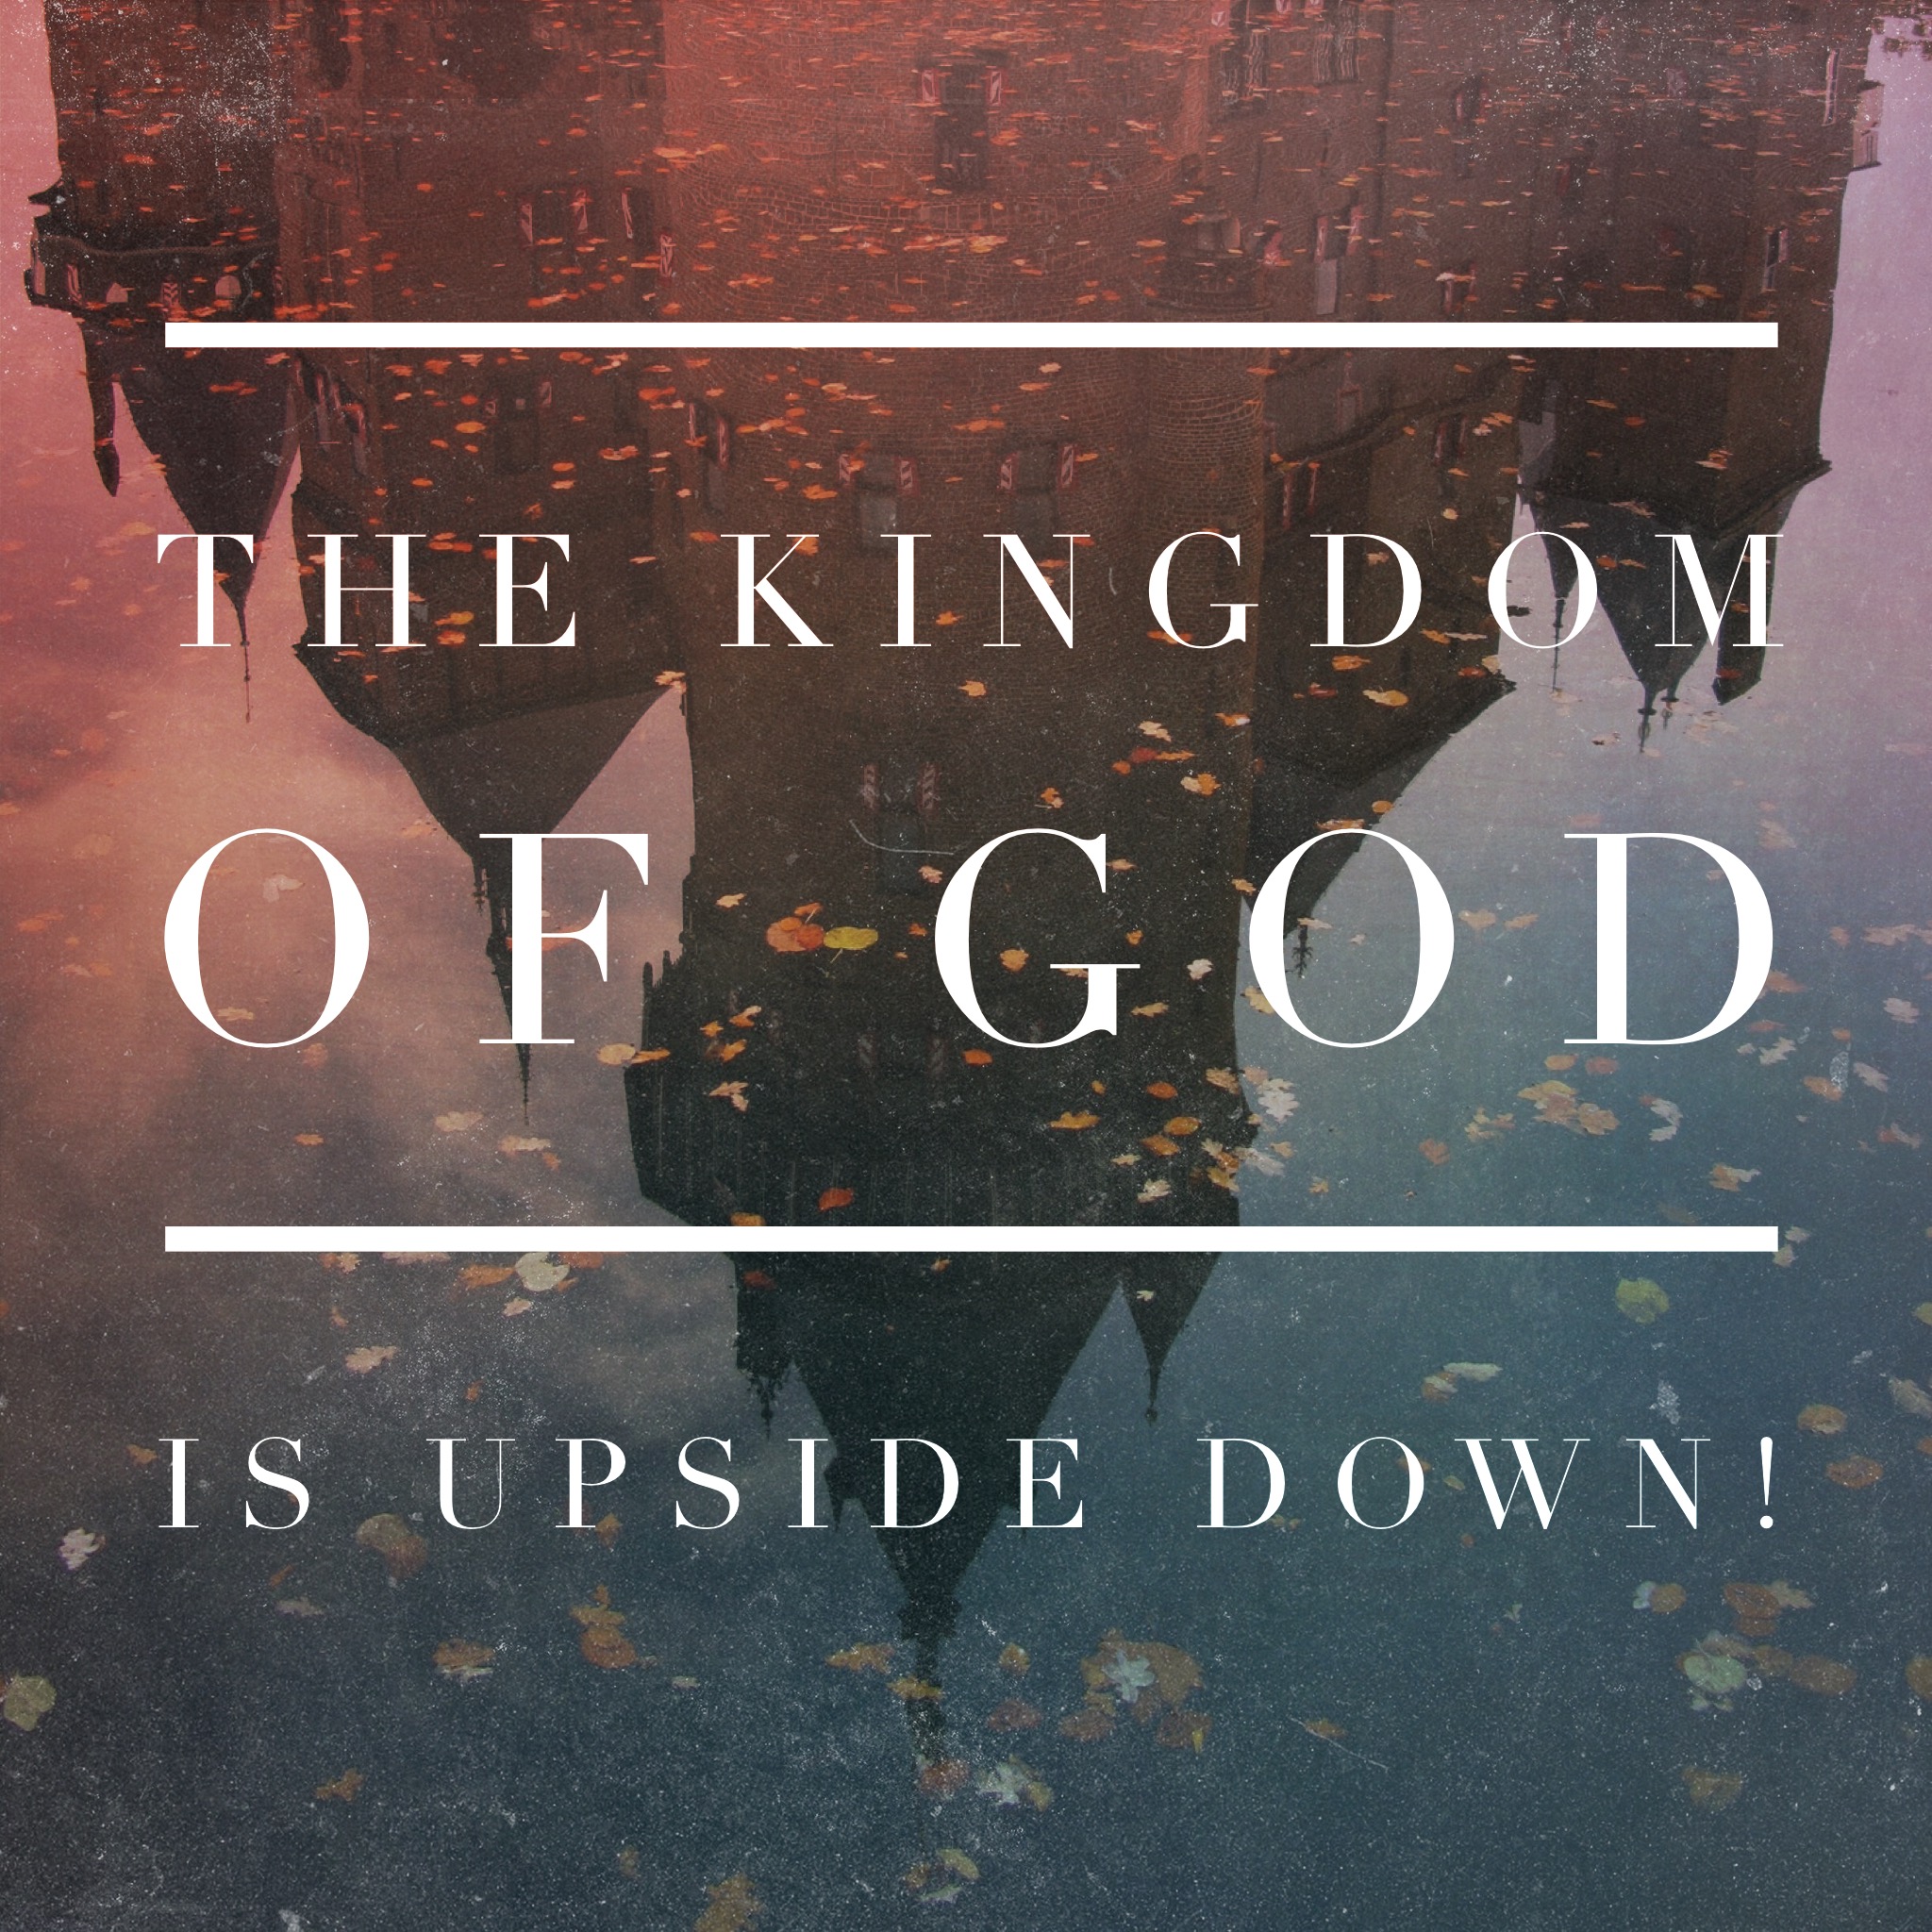 The Kingdom of God is Upside Down!